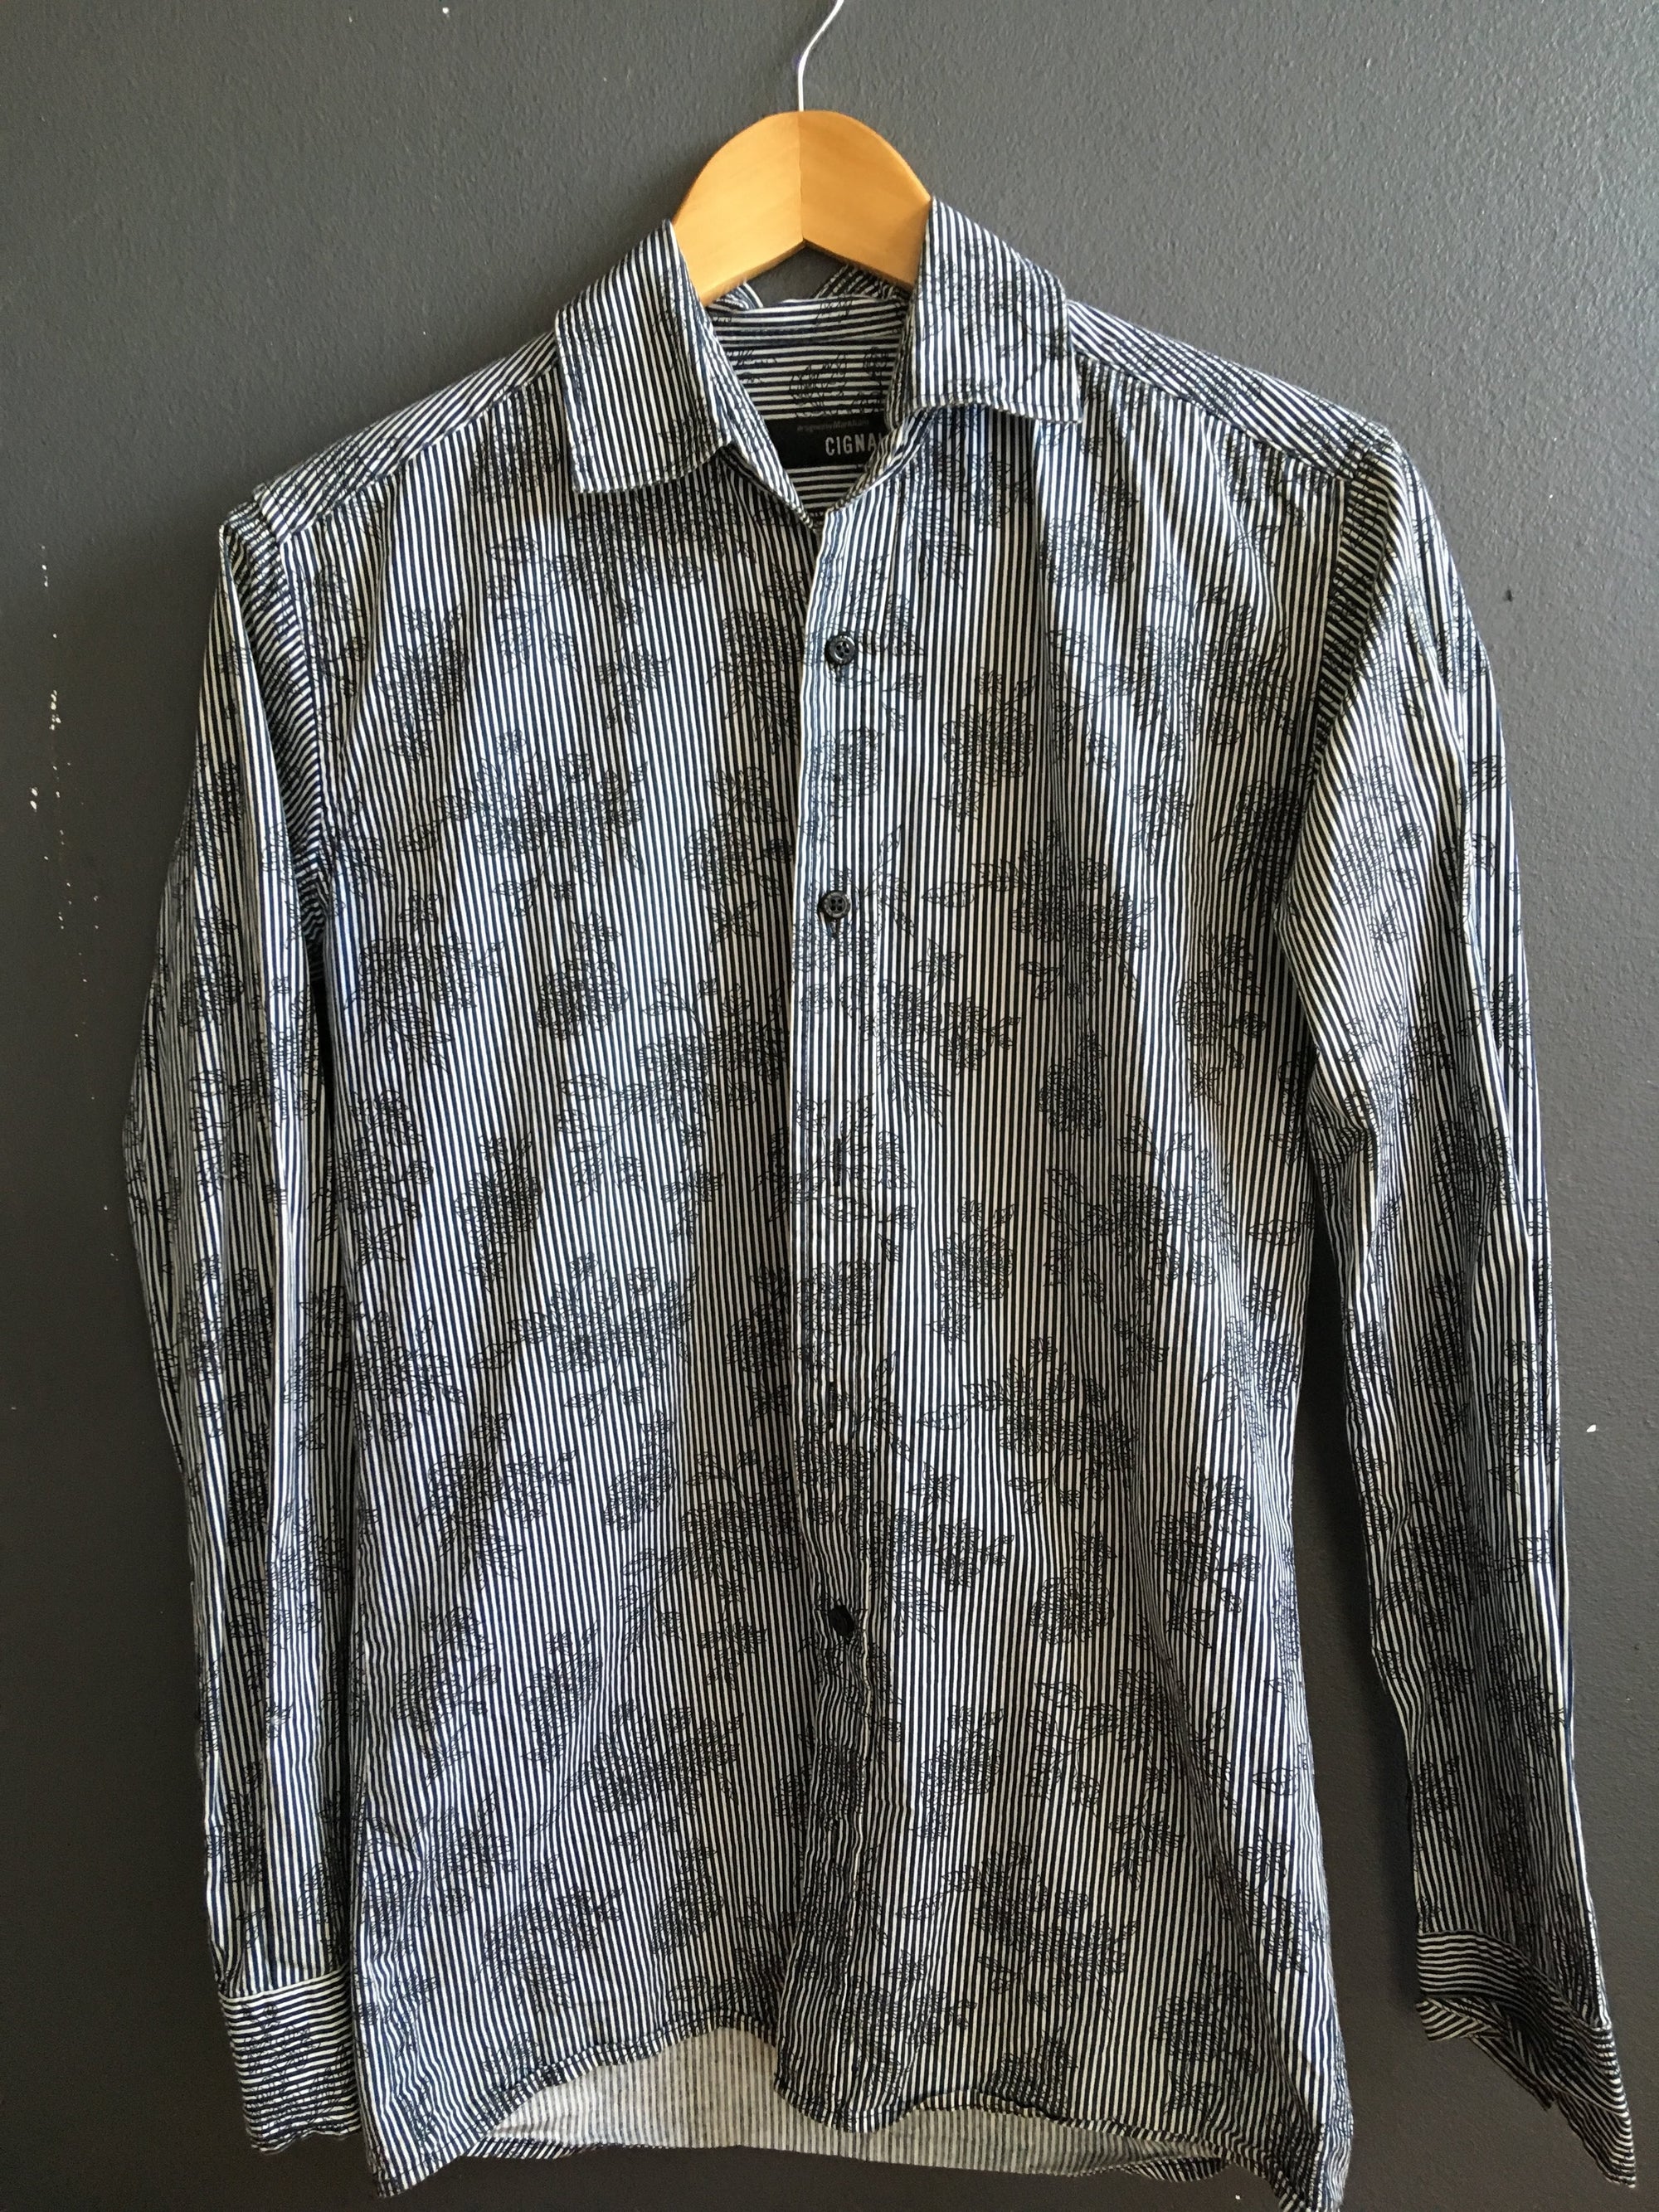 Cignal Stripe Floral Button Up Shirt - S - 2ndhandwarehouse.com